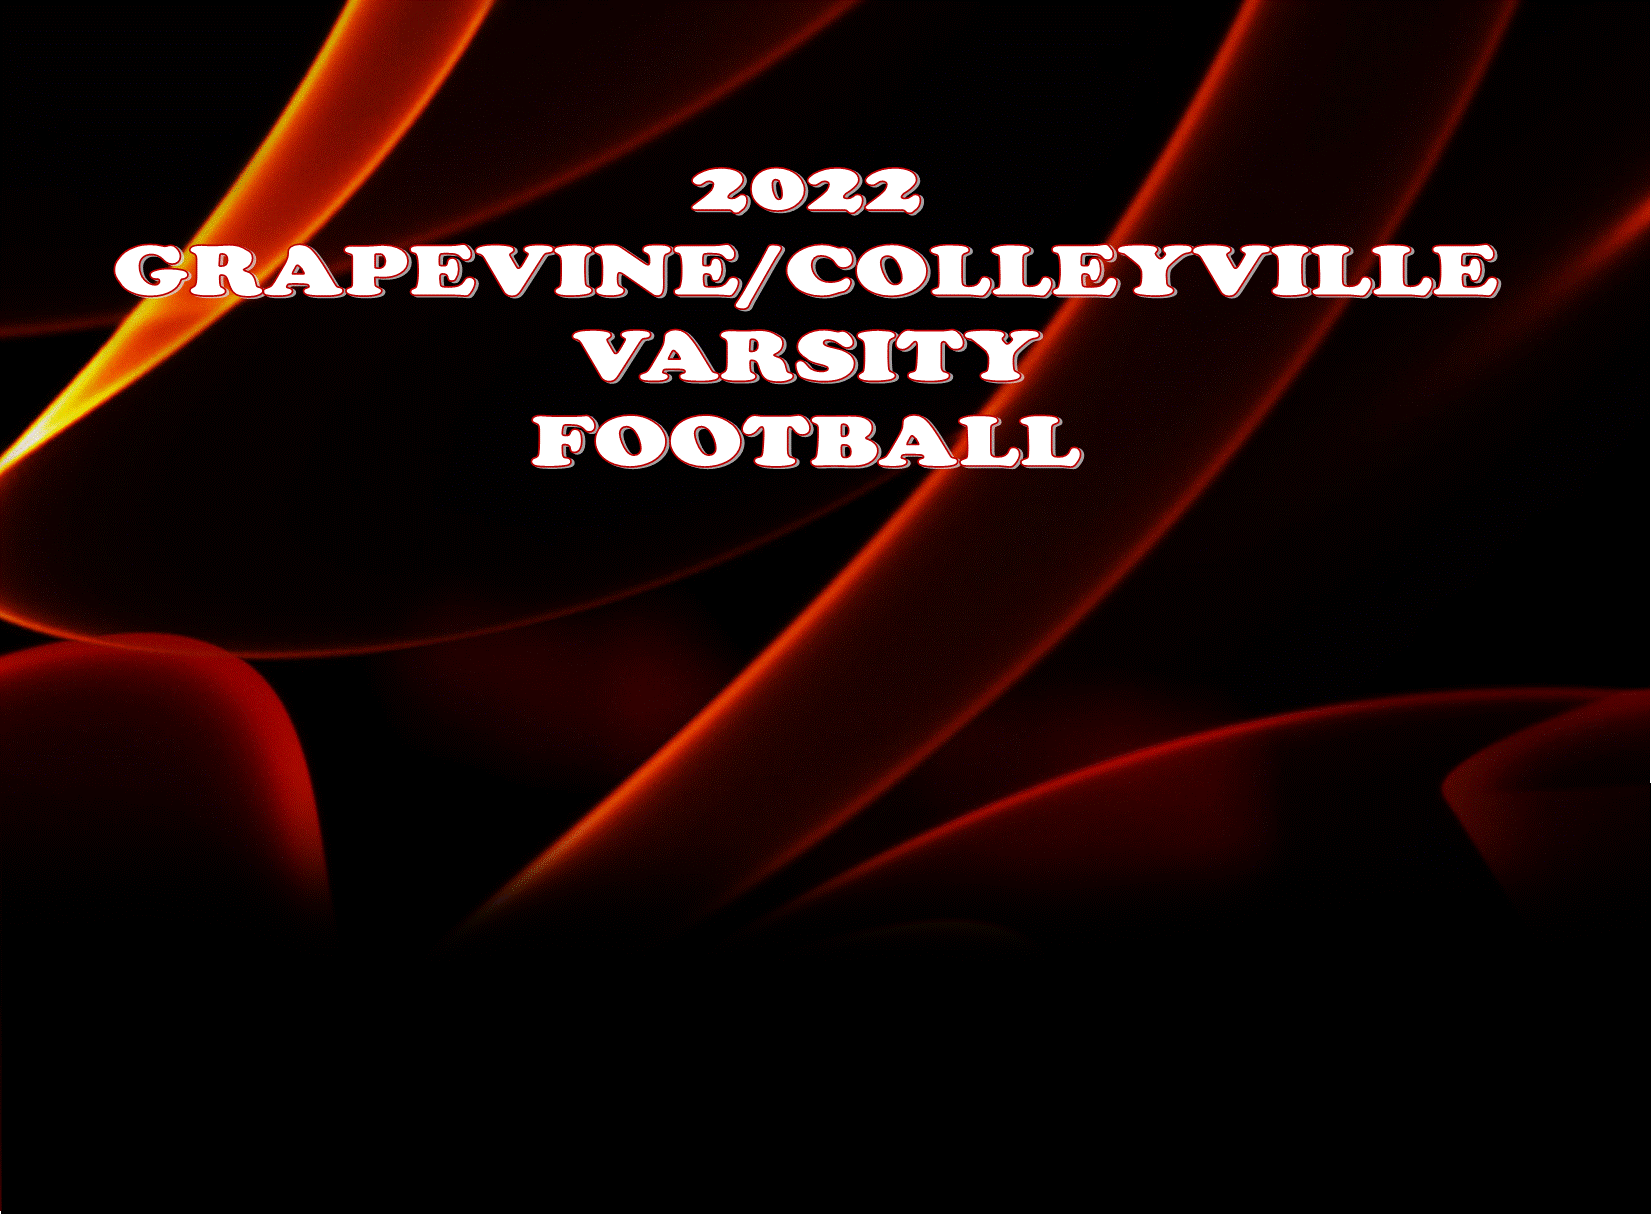 GCISD Varsity Football: Grapevine/Colleyville Heritage 2022 Schedules